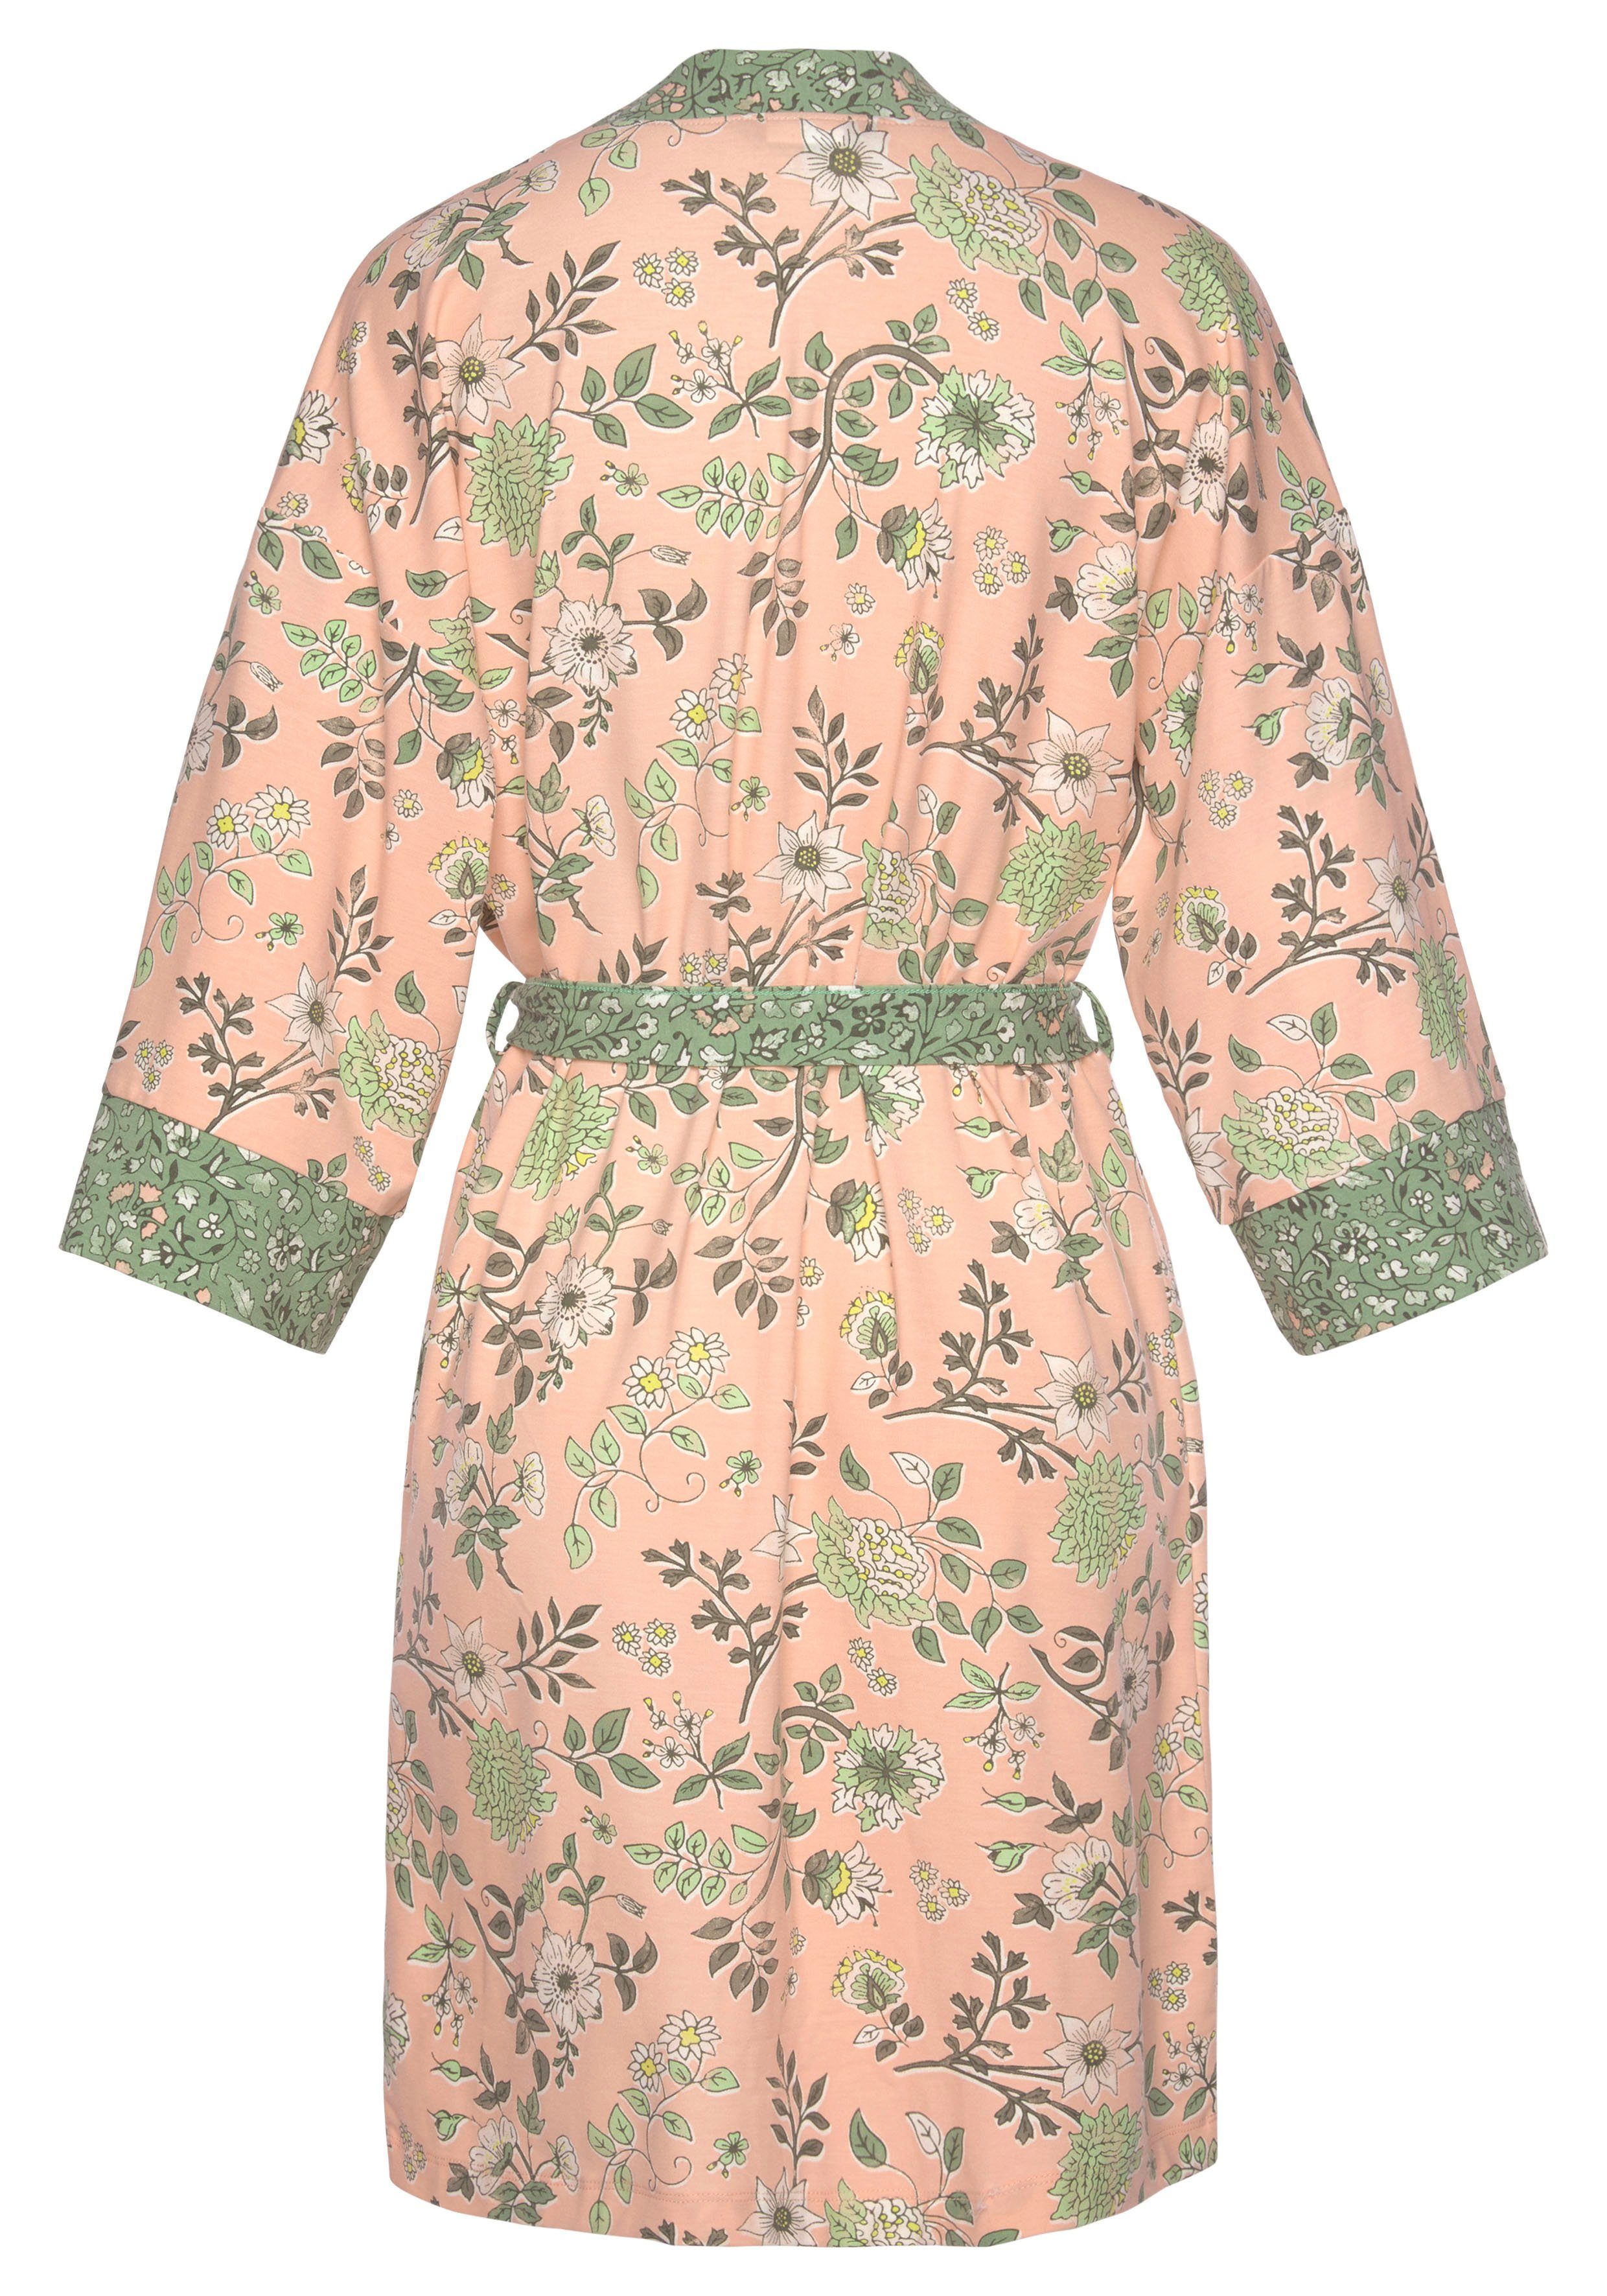 LASCANA nude-schilfgrün Kurzform, Jersey, Kimono, Gürtel, mit Allover-Druck Kimono-Kragen, Blumen